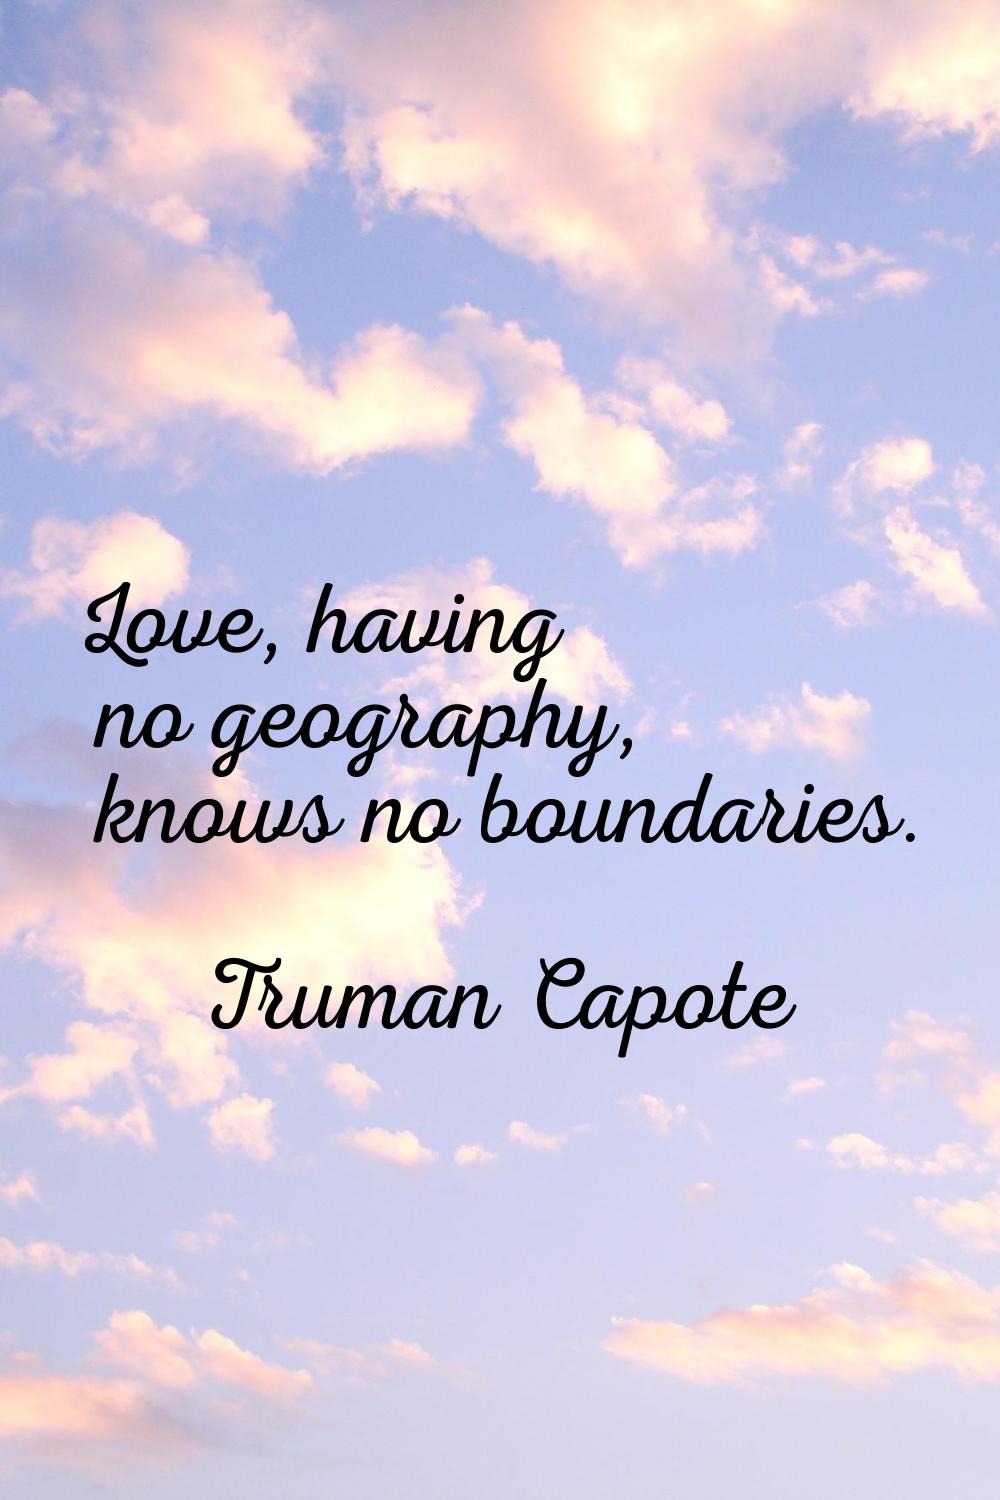 Love, having no geography, knows no boundaries.